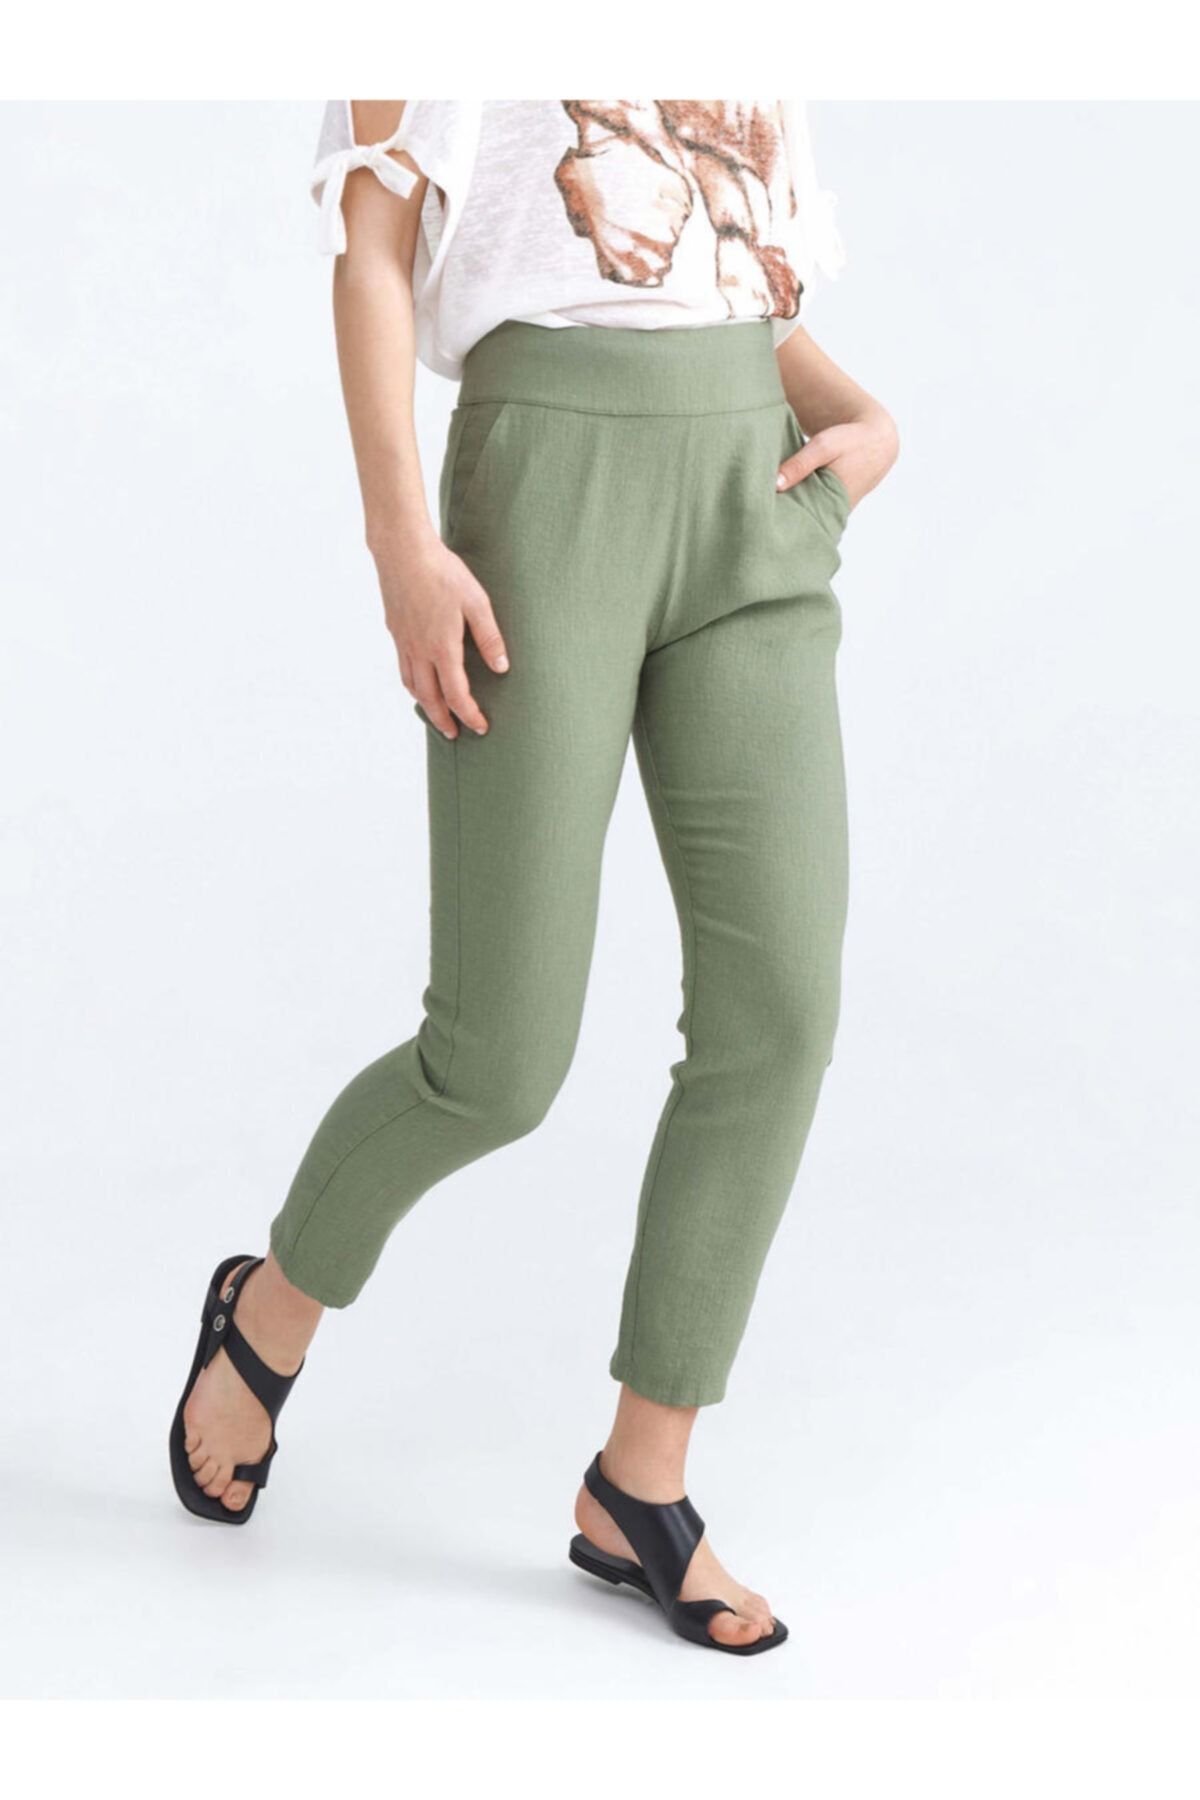 Xint Bayan Düz Haki Yeşil Renk Rahat Kesim Pantolon 200598